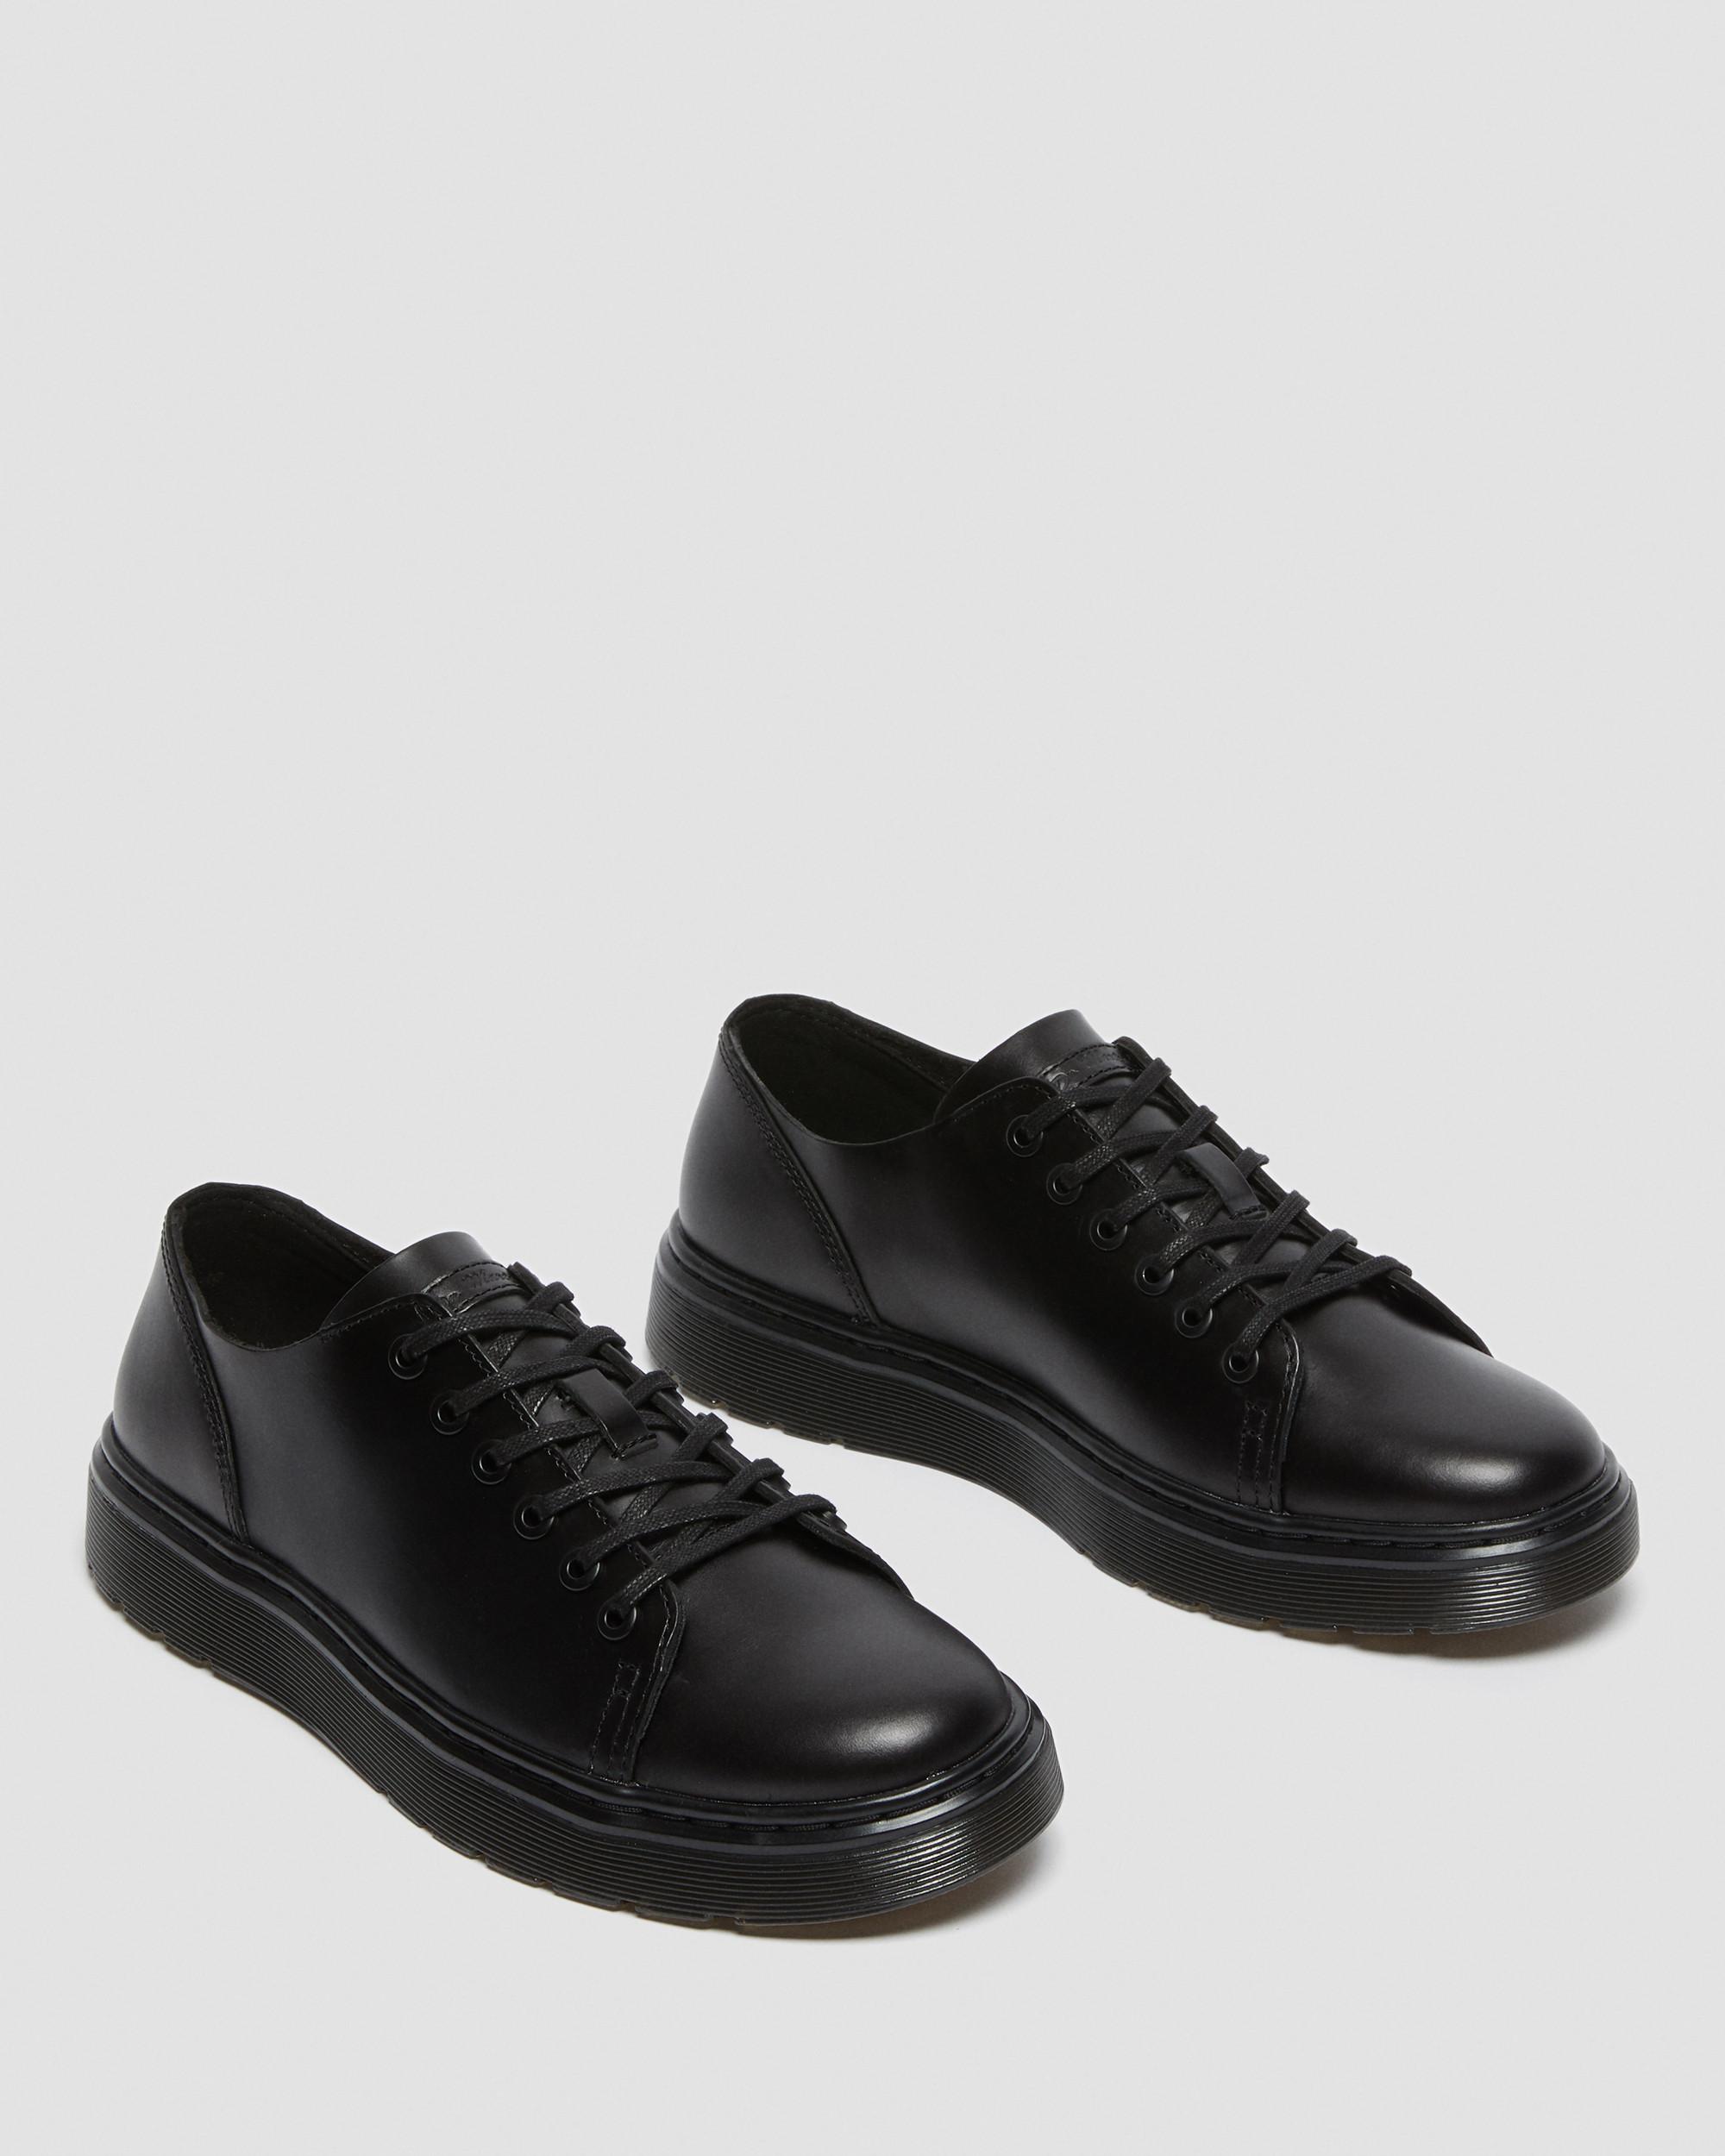 Dante Brando Leather Casual ShoesDante Brando Leather Casual Shoes Dr. Martens